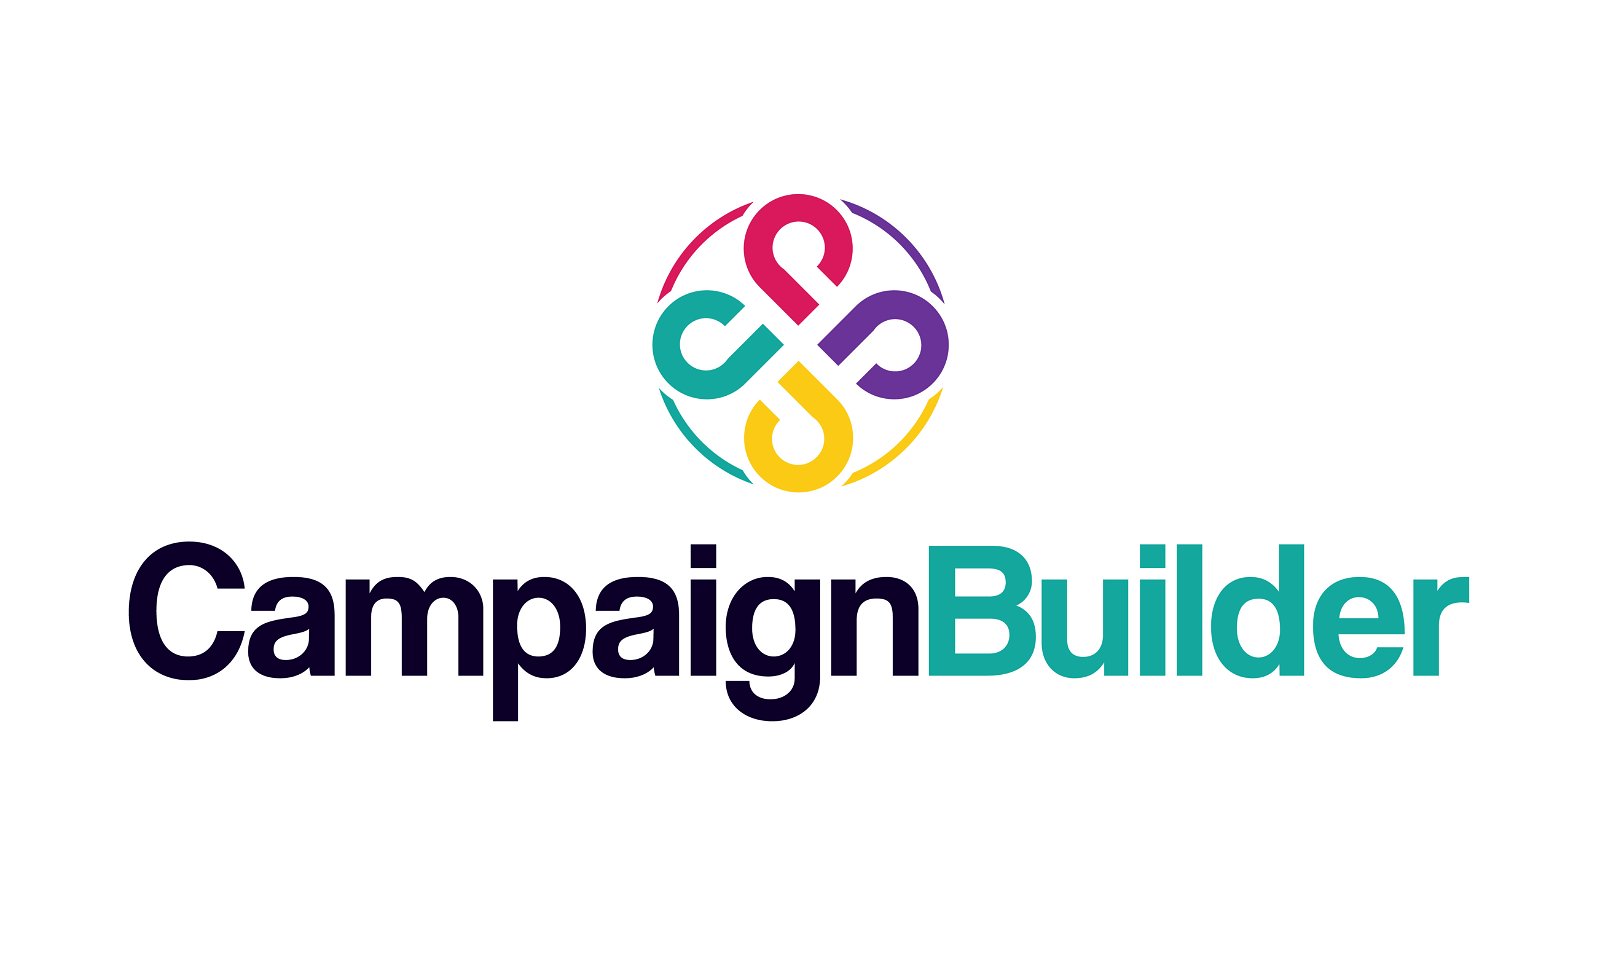 CampaignBuilder.com - Creative brandable domain for sale